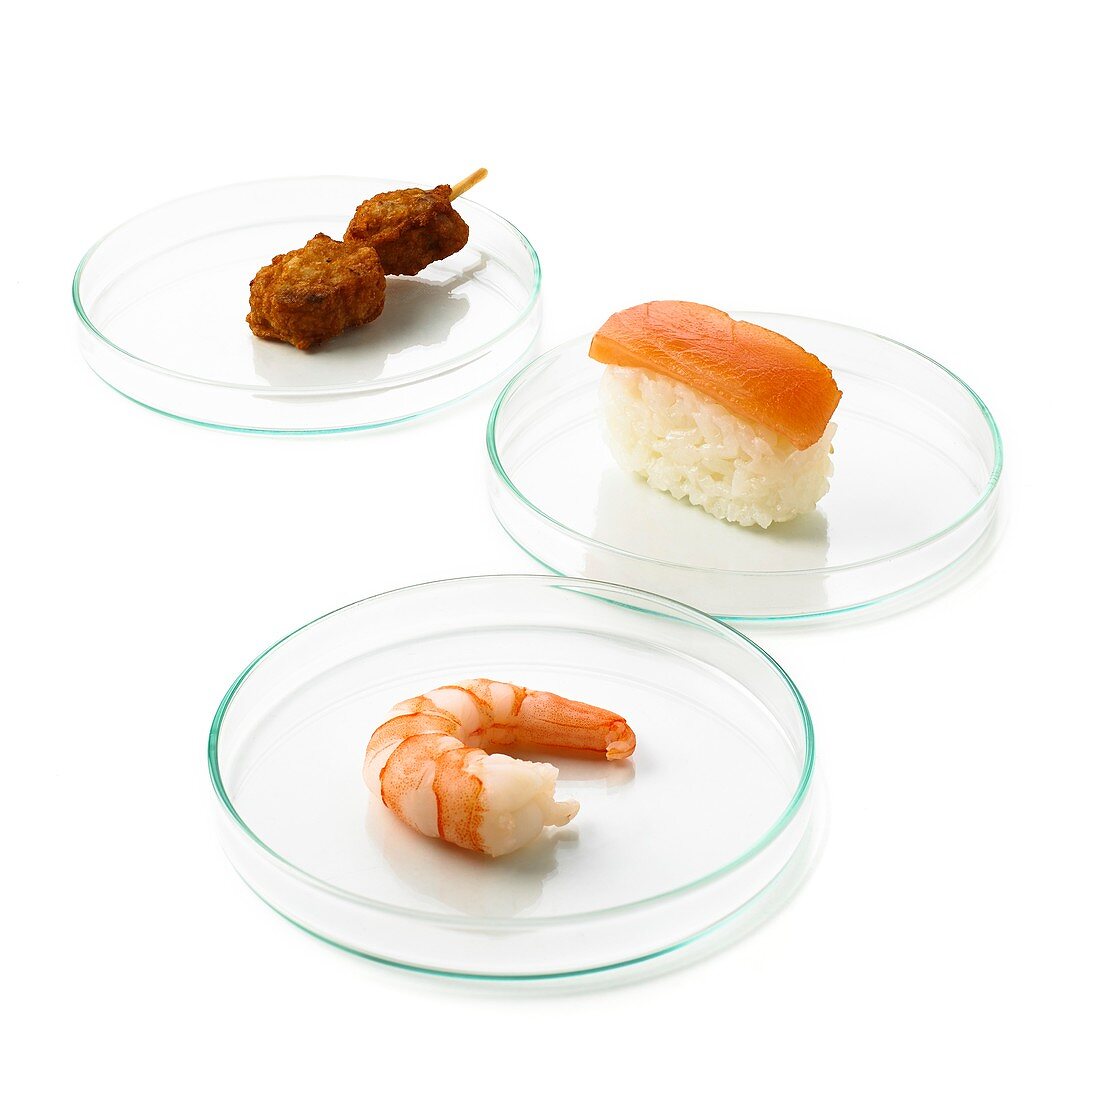 Food testing,conceptual image